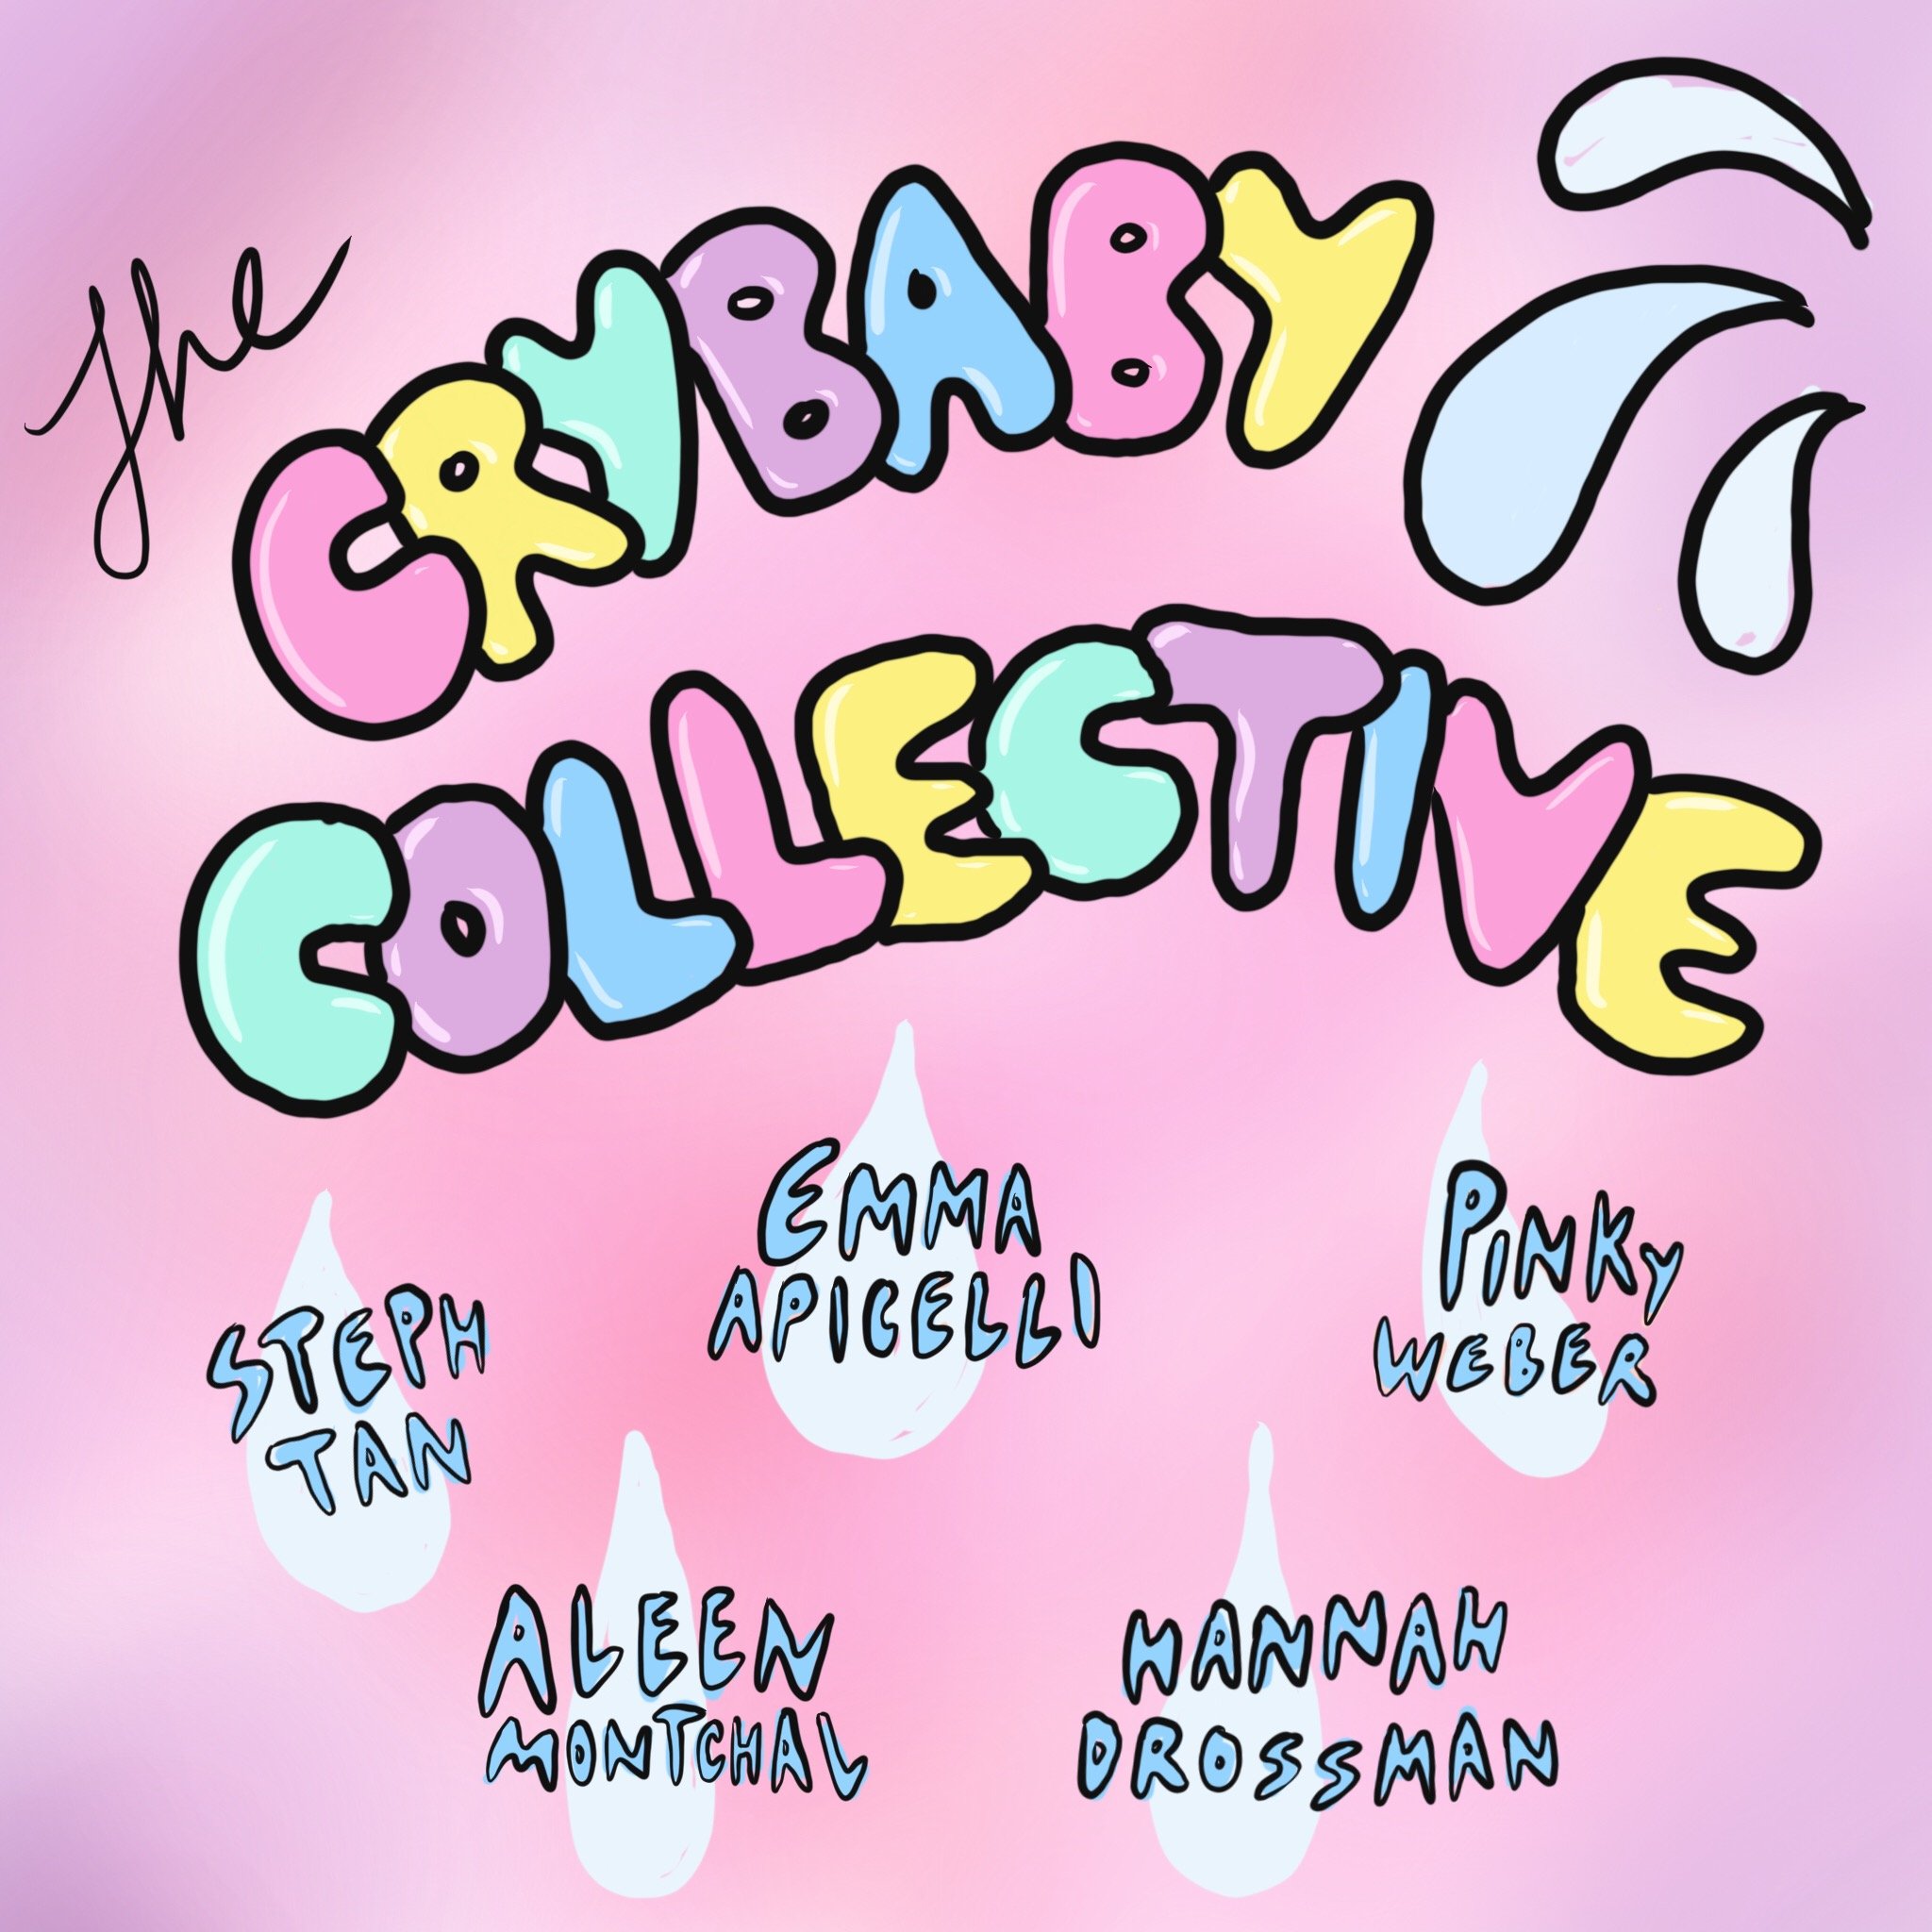 crybaby collective ig flyer.JPG